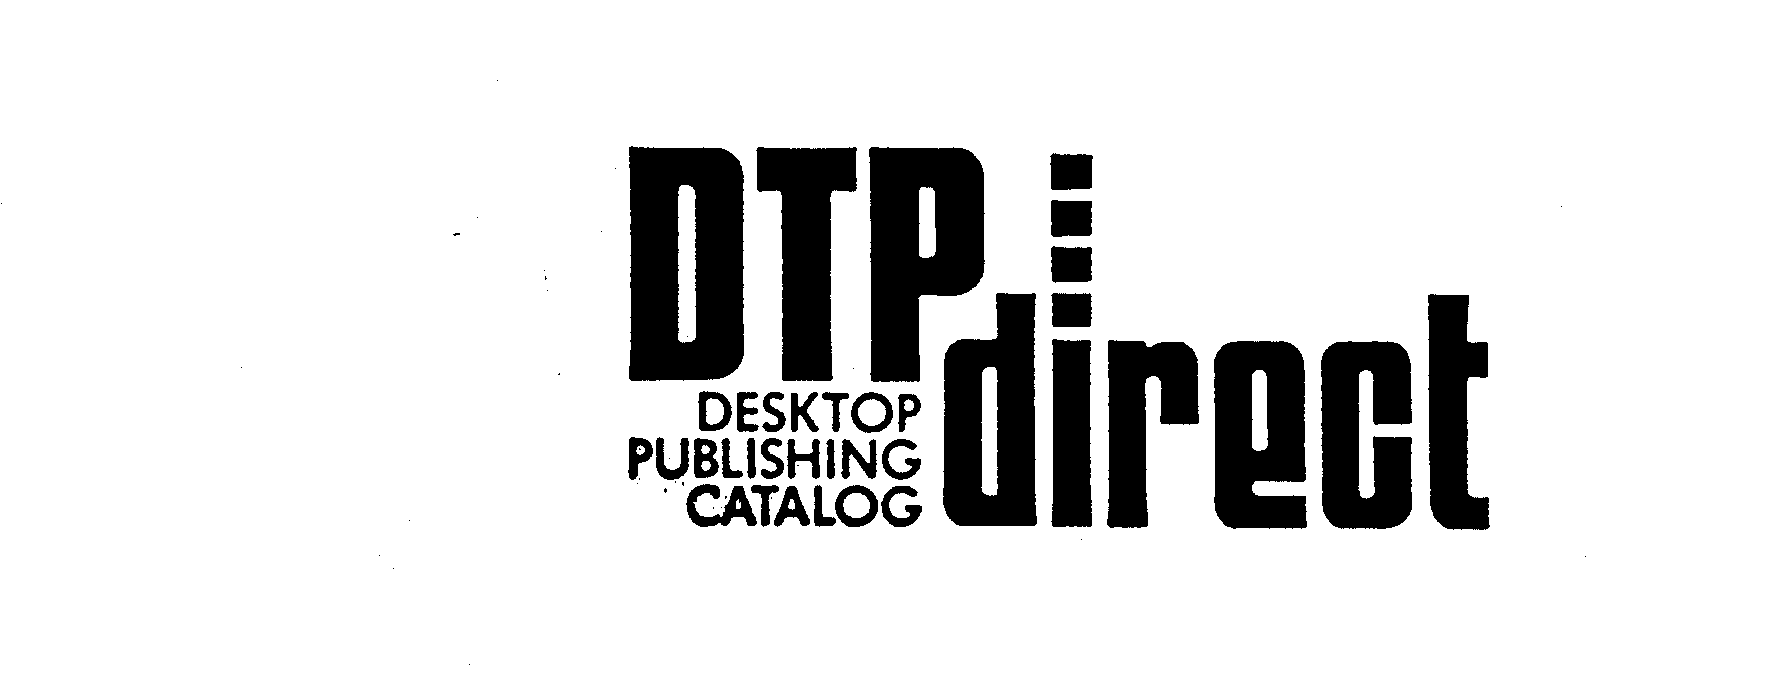  DTP DIRECT DESKTOP PUBLISHING CATALOG